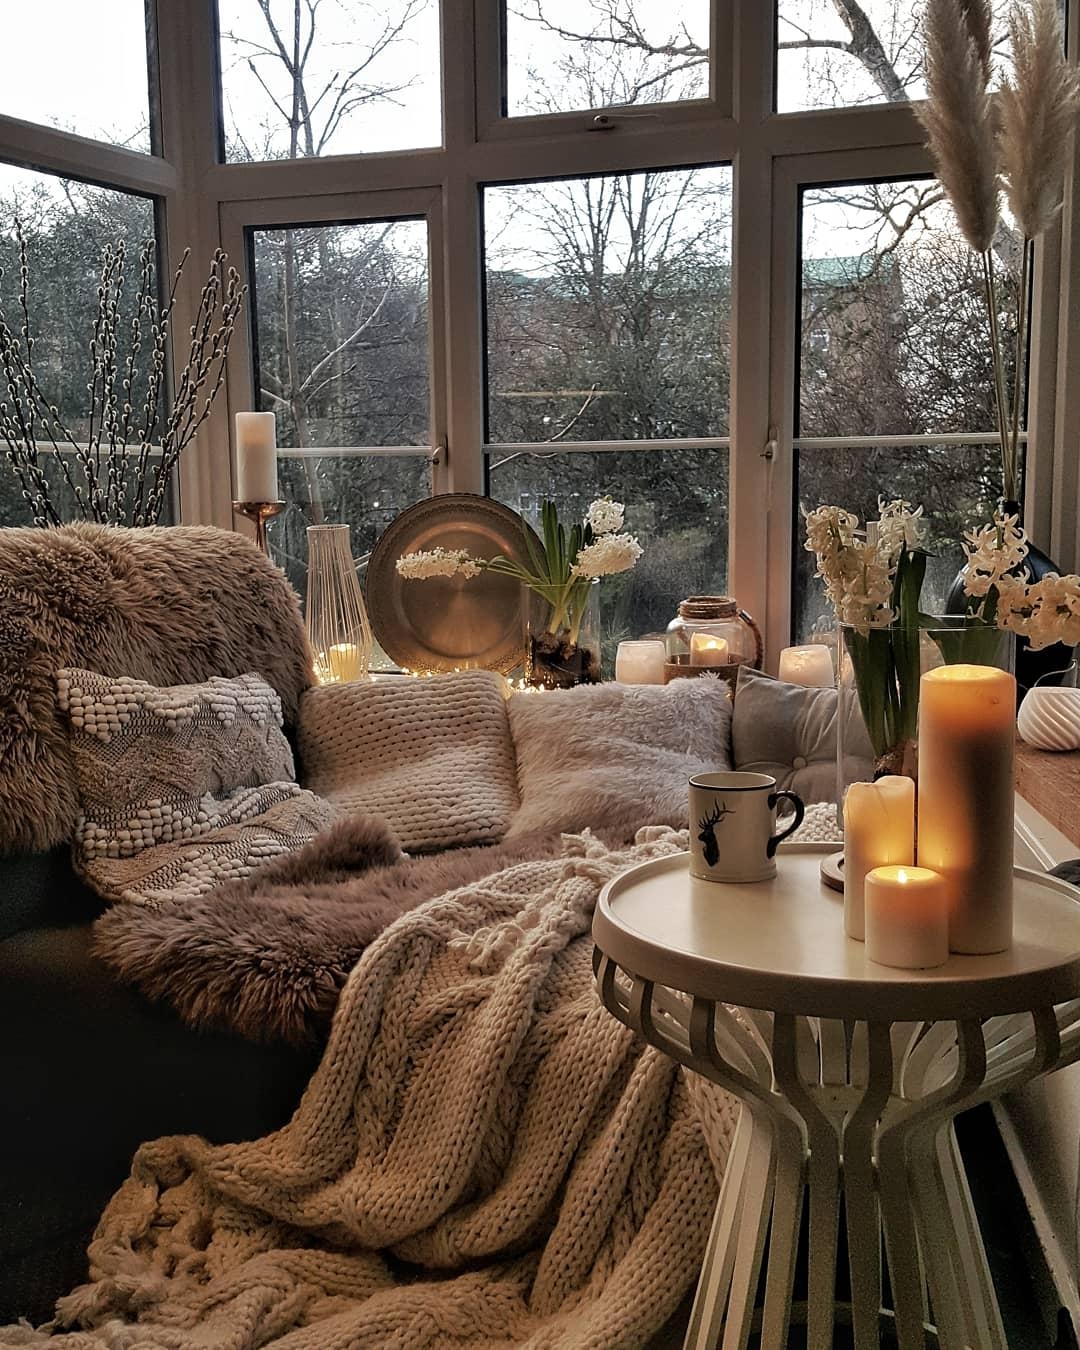 #interior #frühling #wohnzimmer #cozy #hygge #home #couchstyle